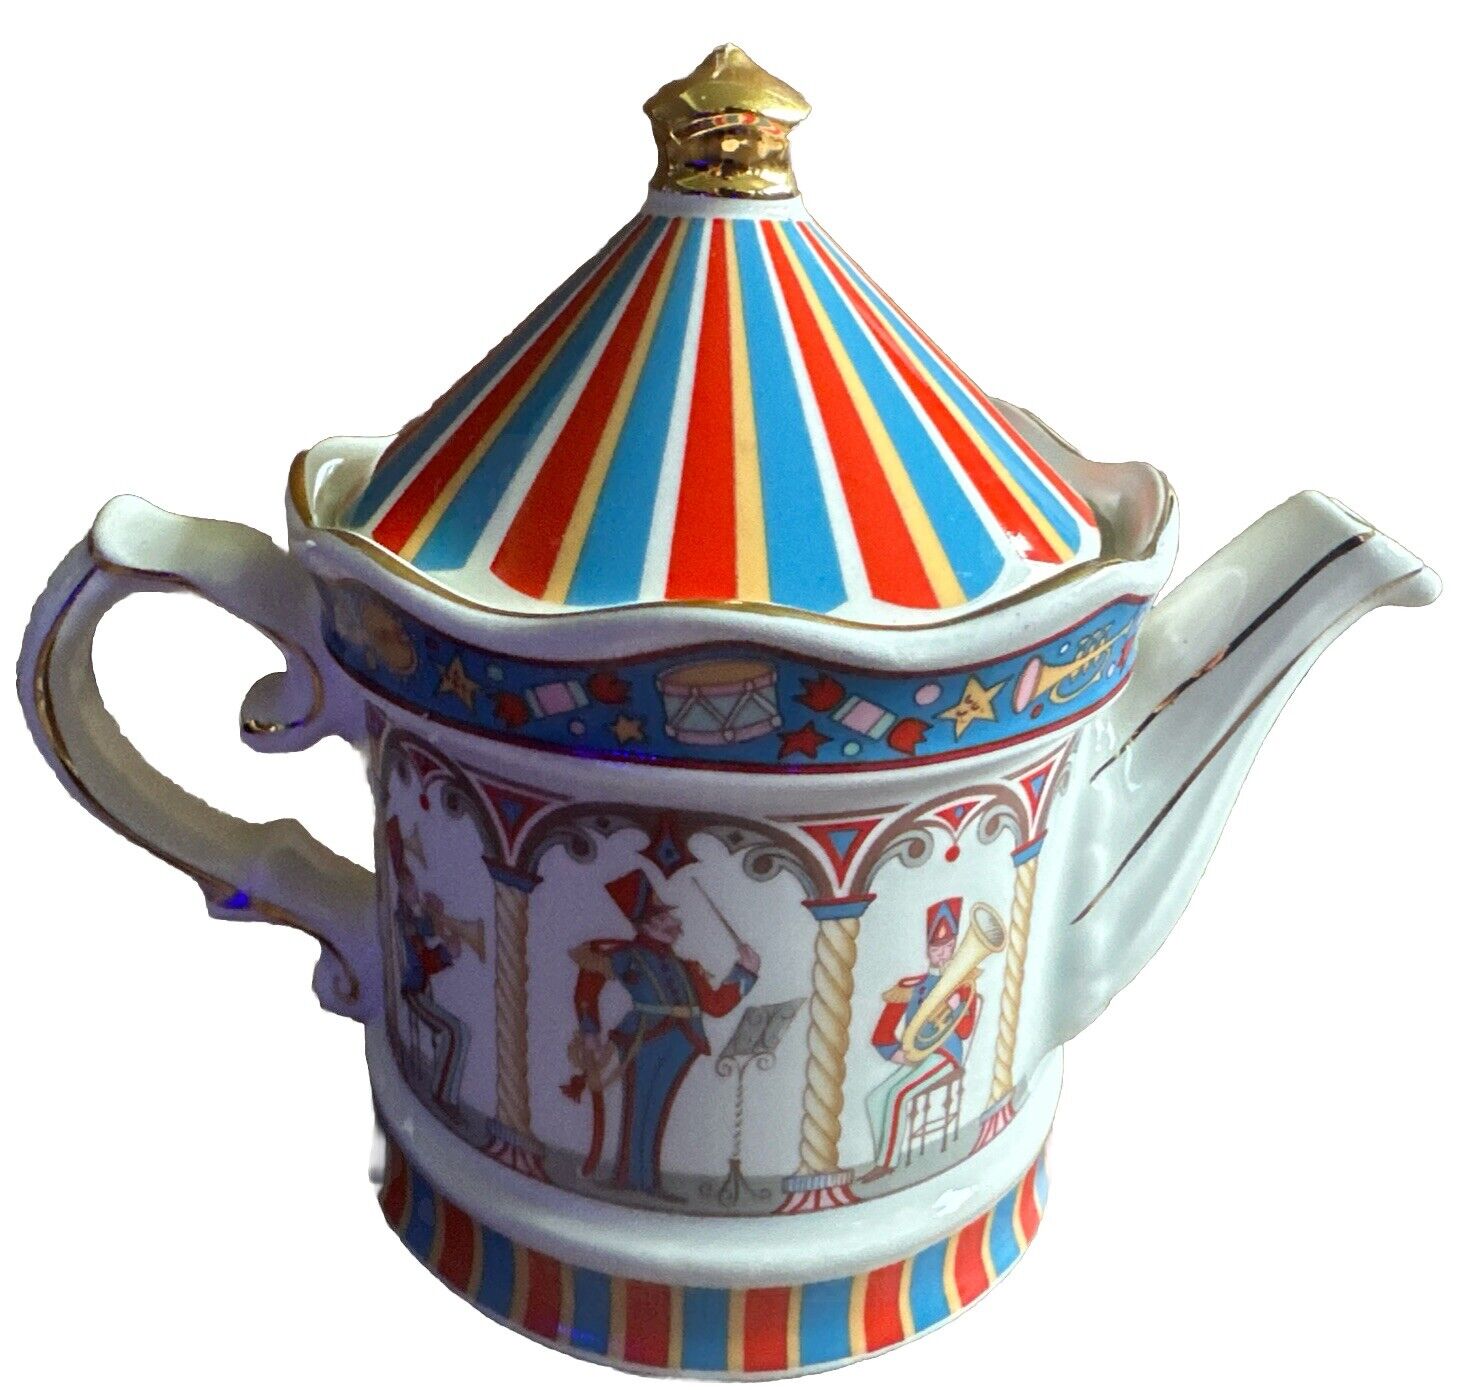 Windsor Band Carousel Teapot Staffordshire England